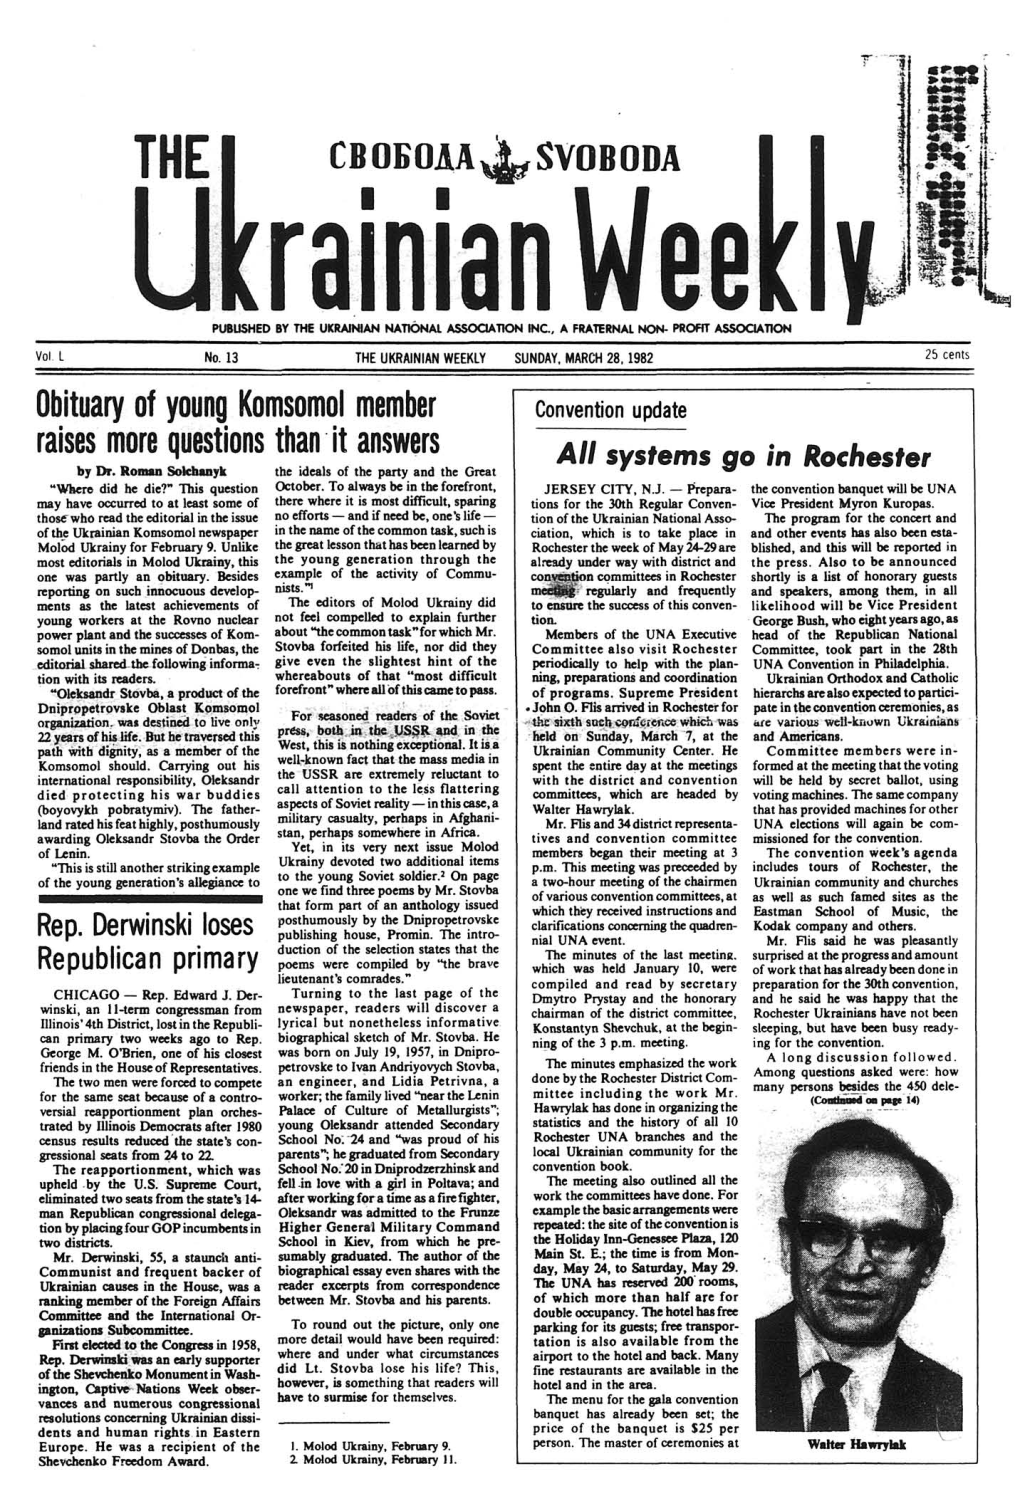 The Ukrainian Weekly 1982, No.13